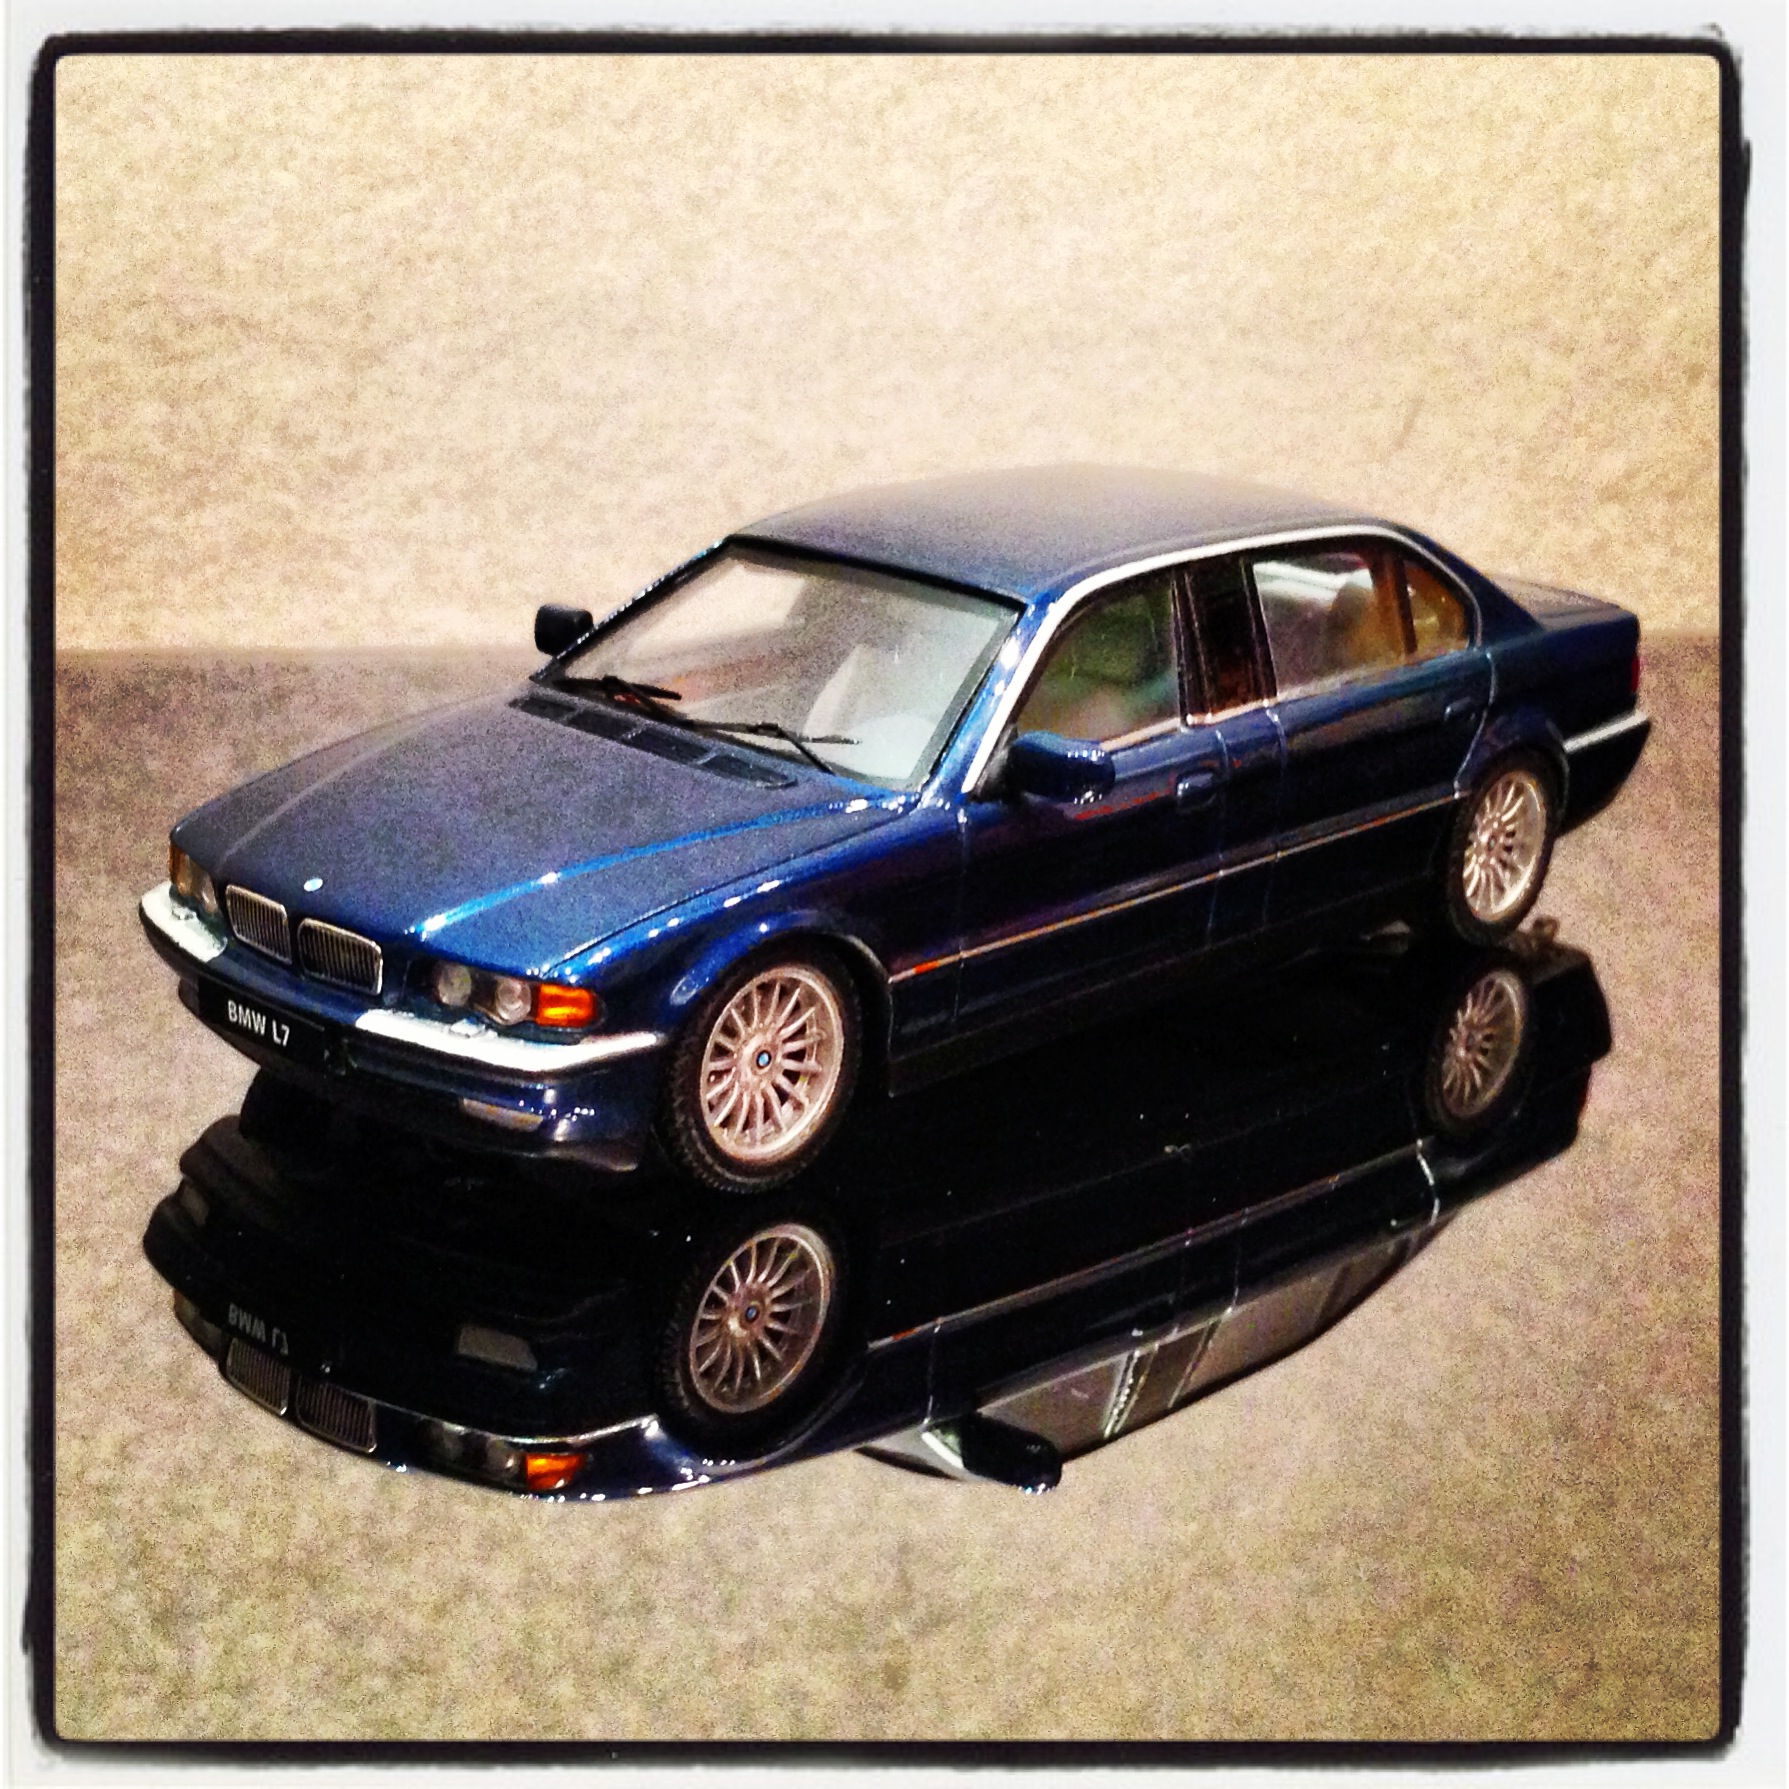 BMW 750iXL (E38/L7) facelift, "Luxury",  biarritz blue, Hekorsa Edition, le  1 of 1,000pcs. (premiumx)